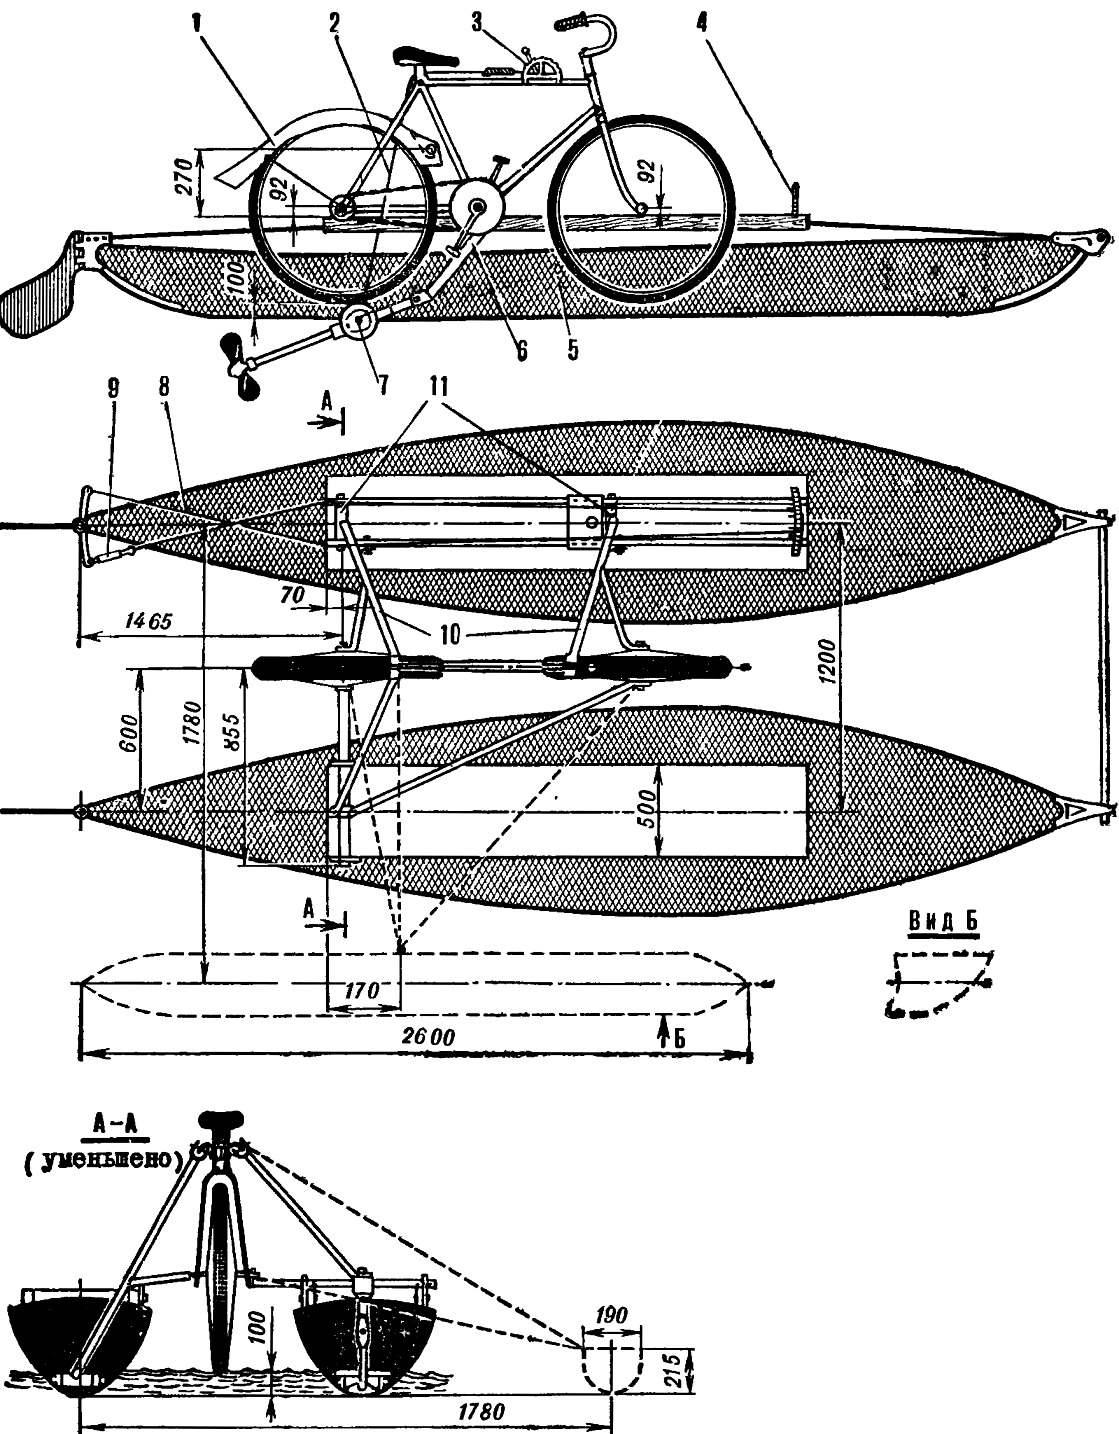 Fig. 1. The layout of velebitski